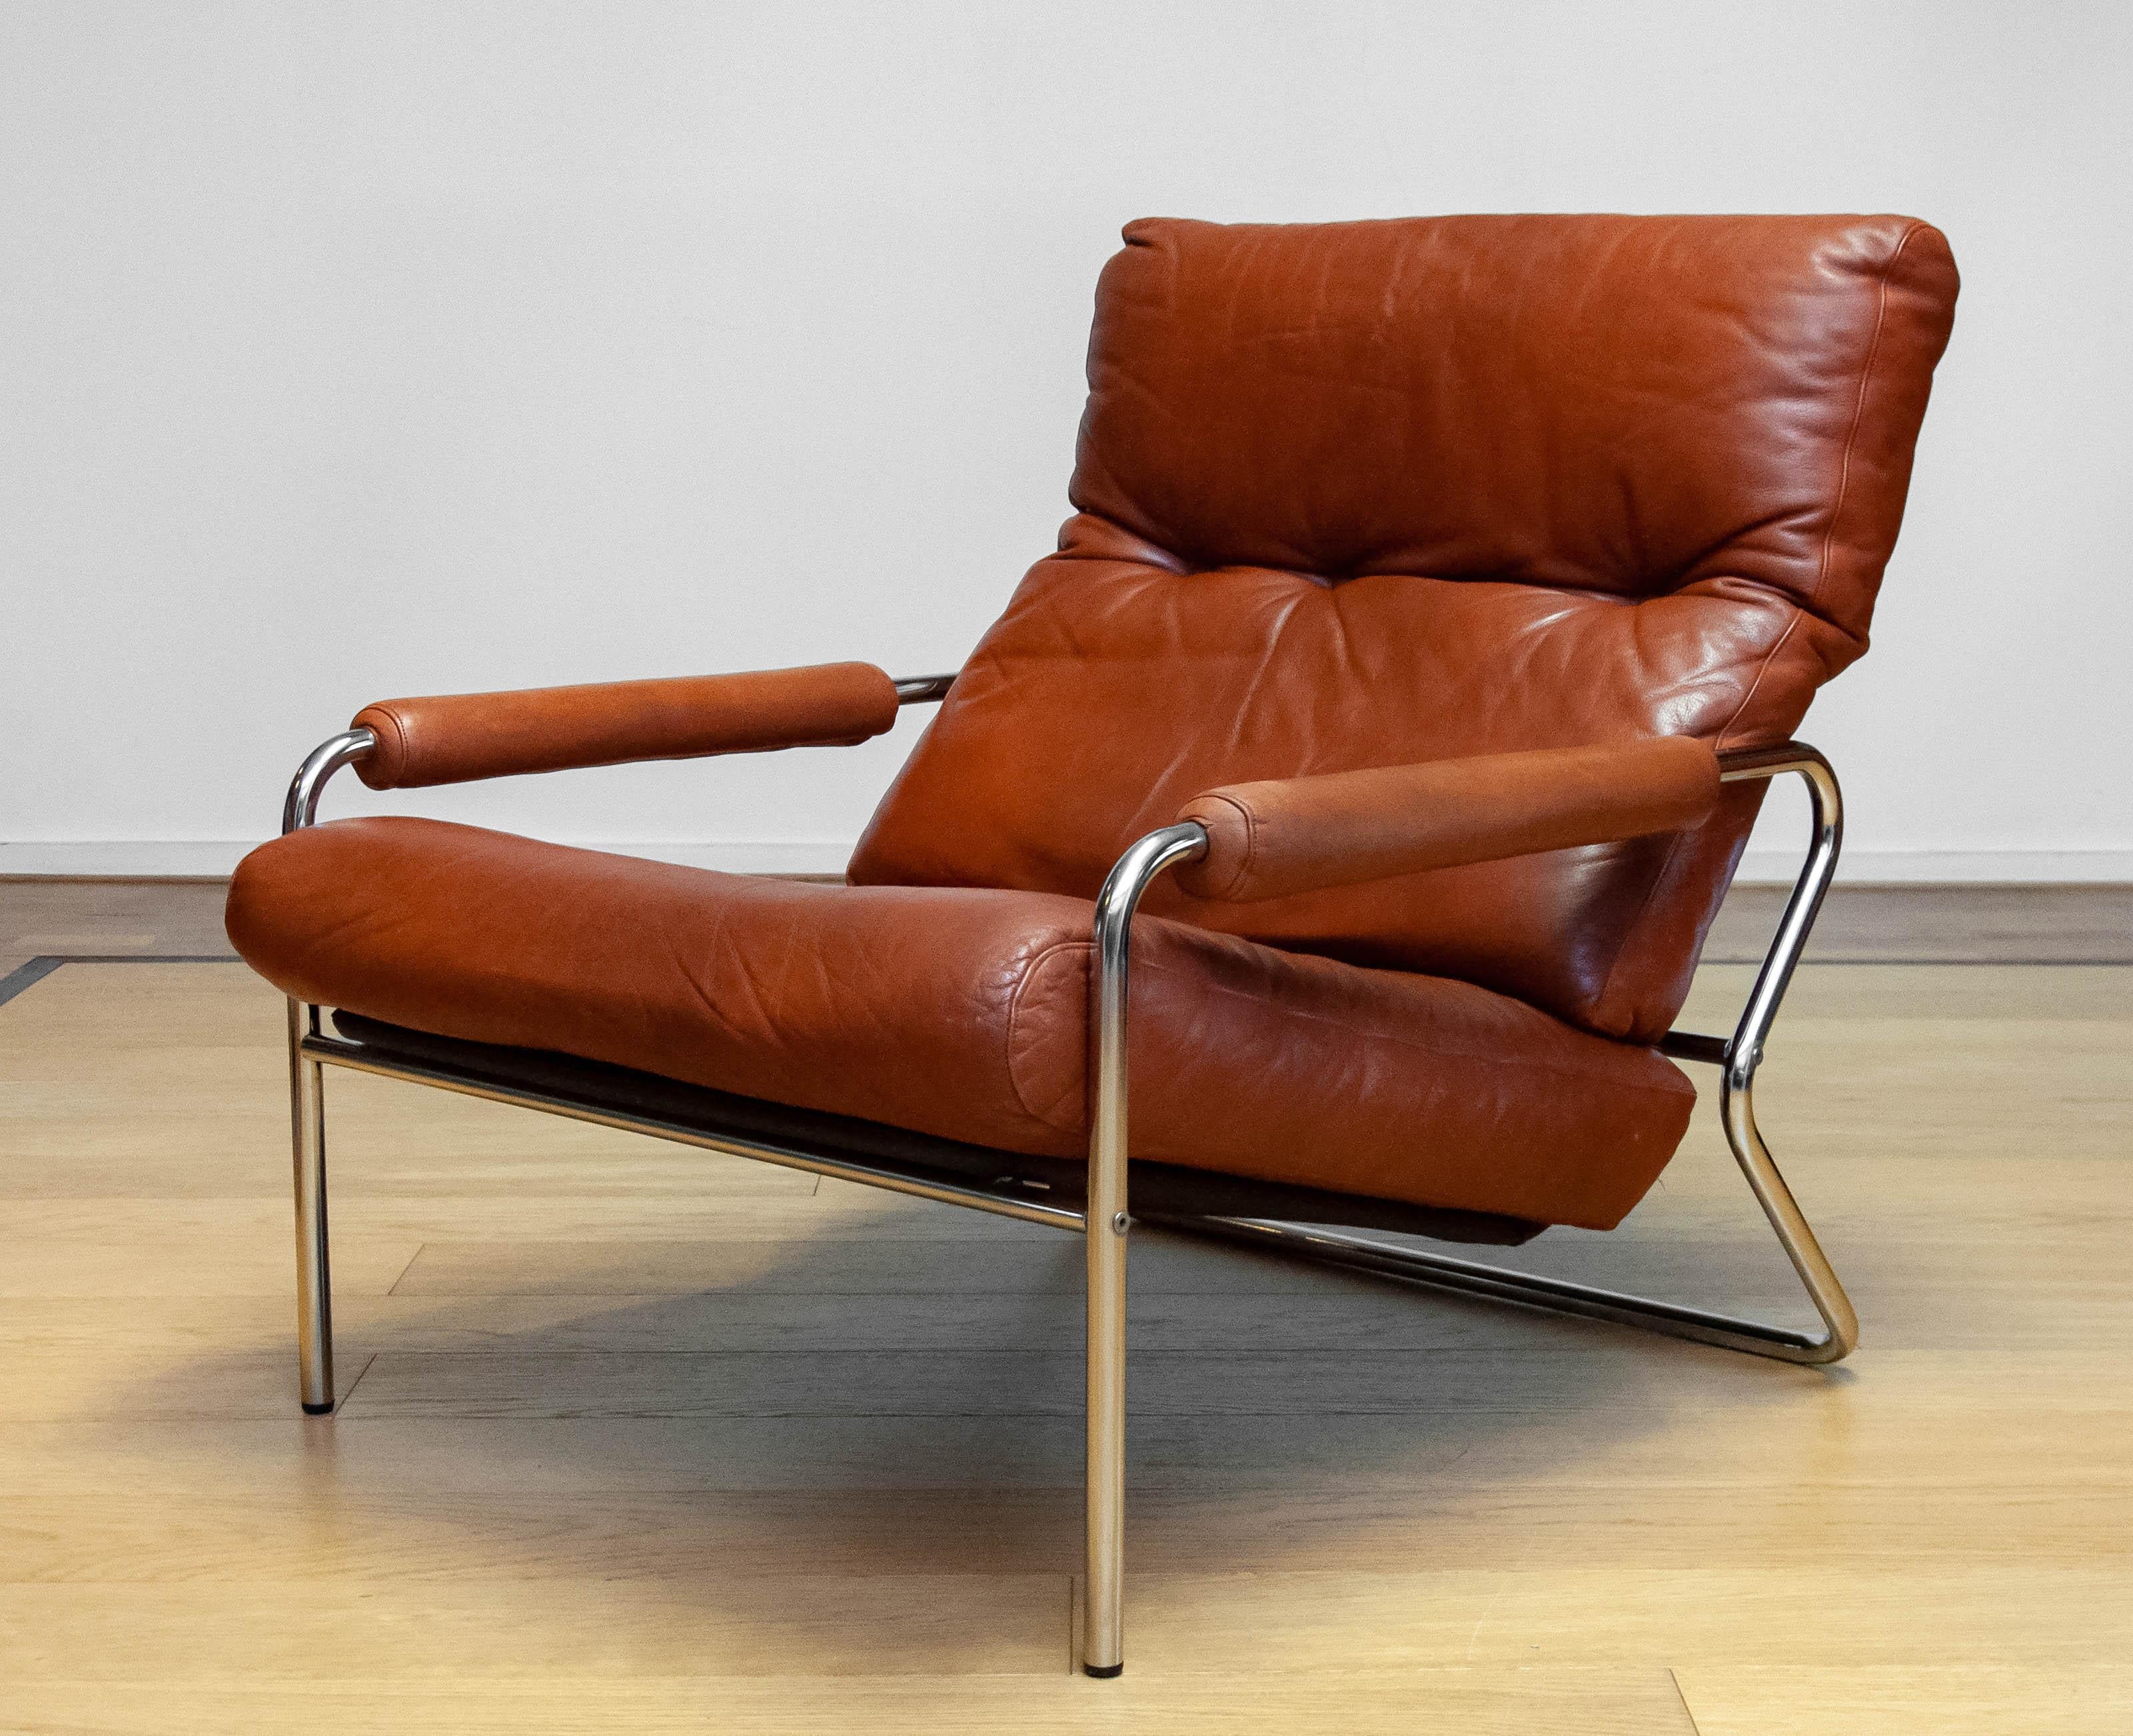 Metal 1960s Swedish Tubular Chrome And Brown Leather Brutalist Lounge Chair